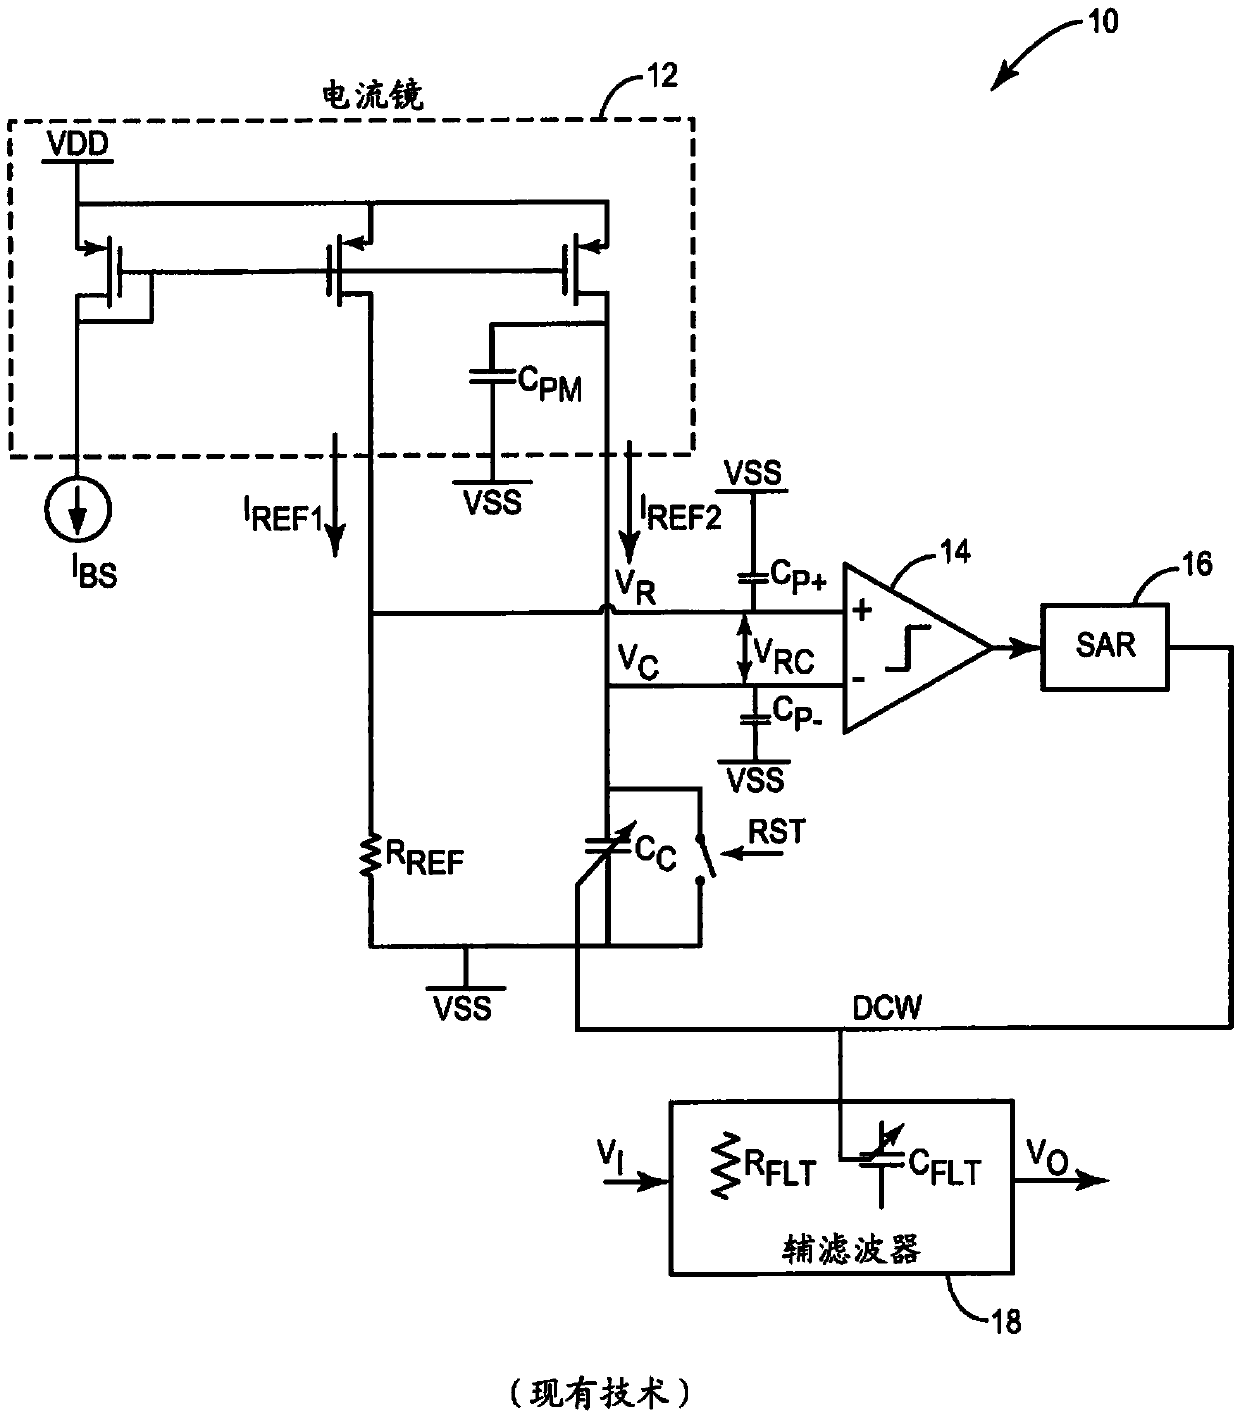 High accuracy (resistance-capacitance) RC calibration circuit